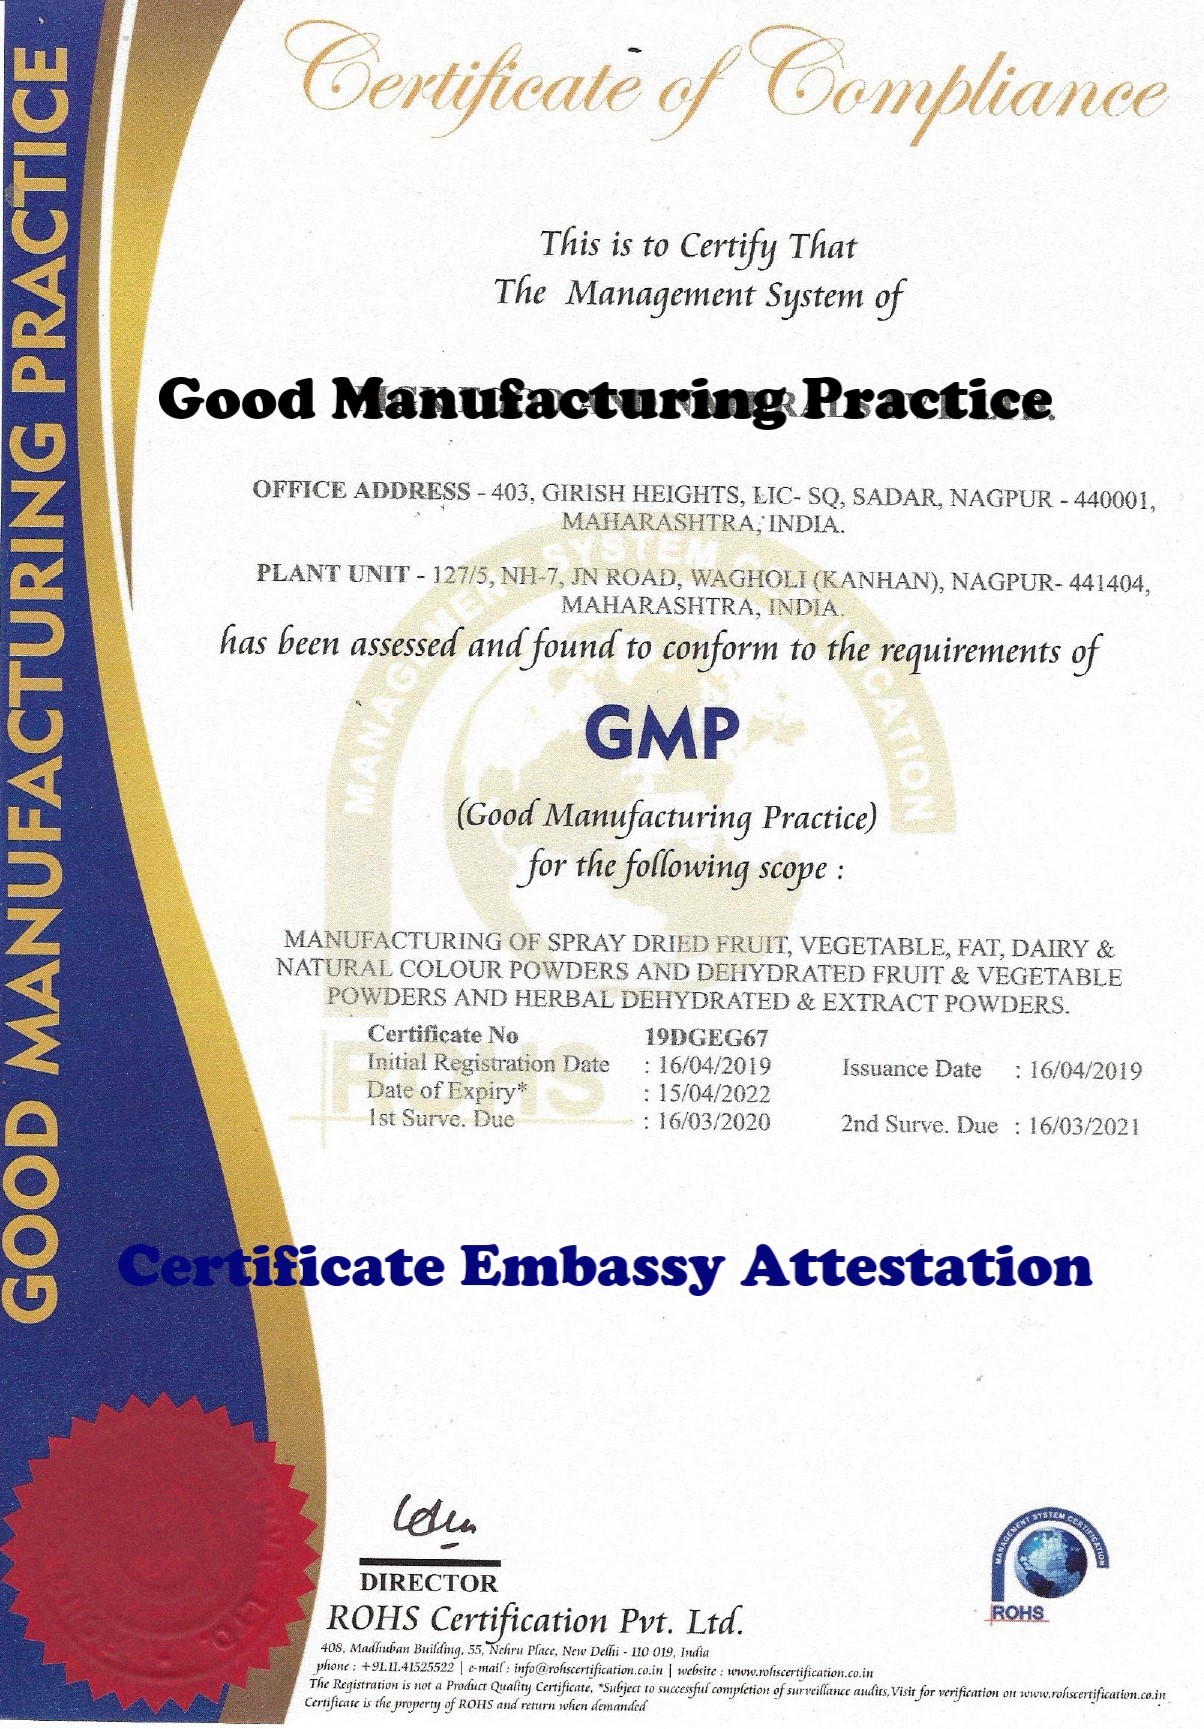 GMP Certificate Attestation from Kazakhstan Embassy